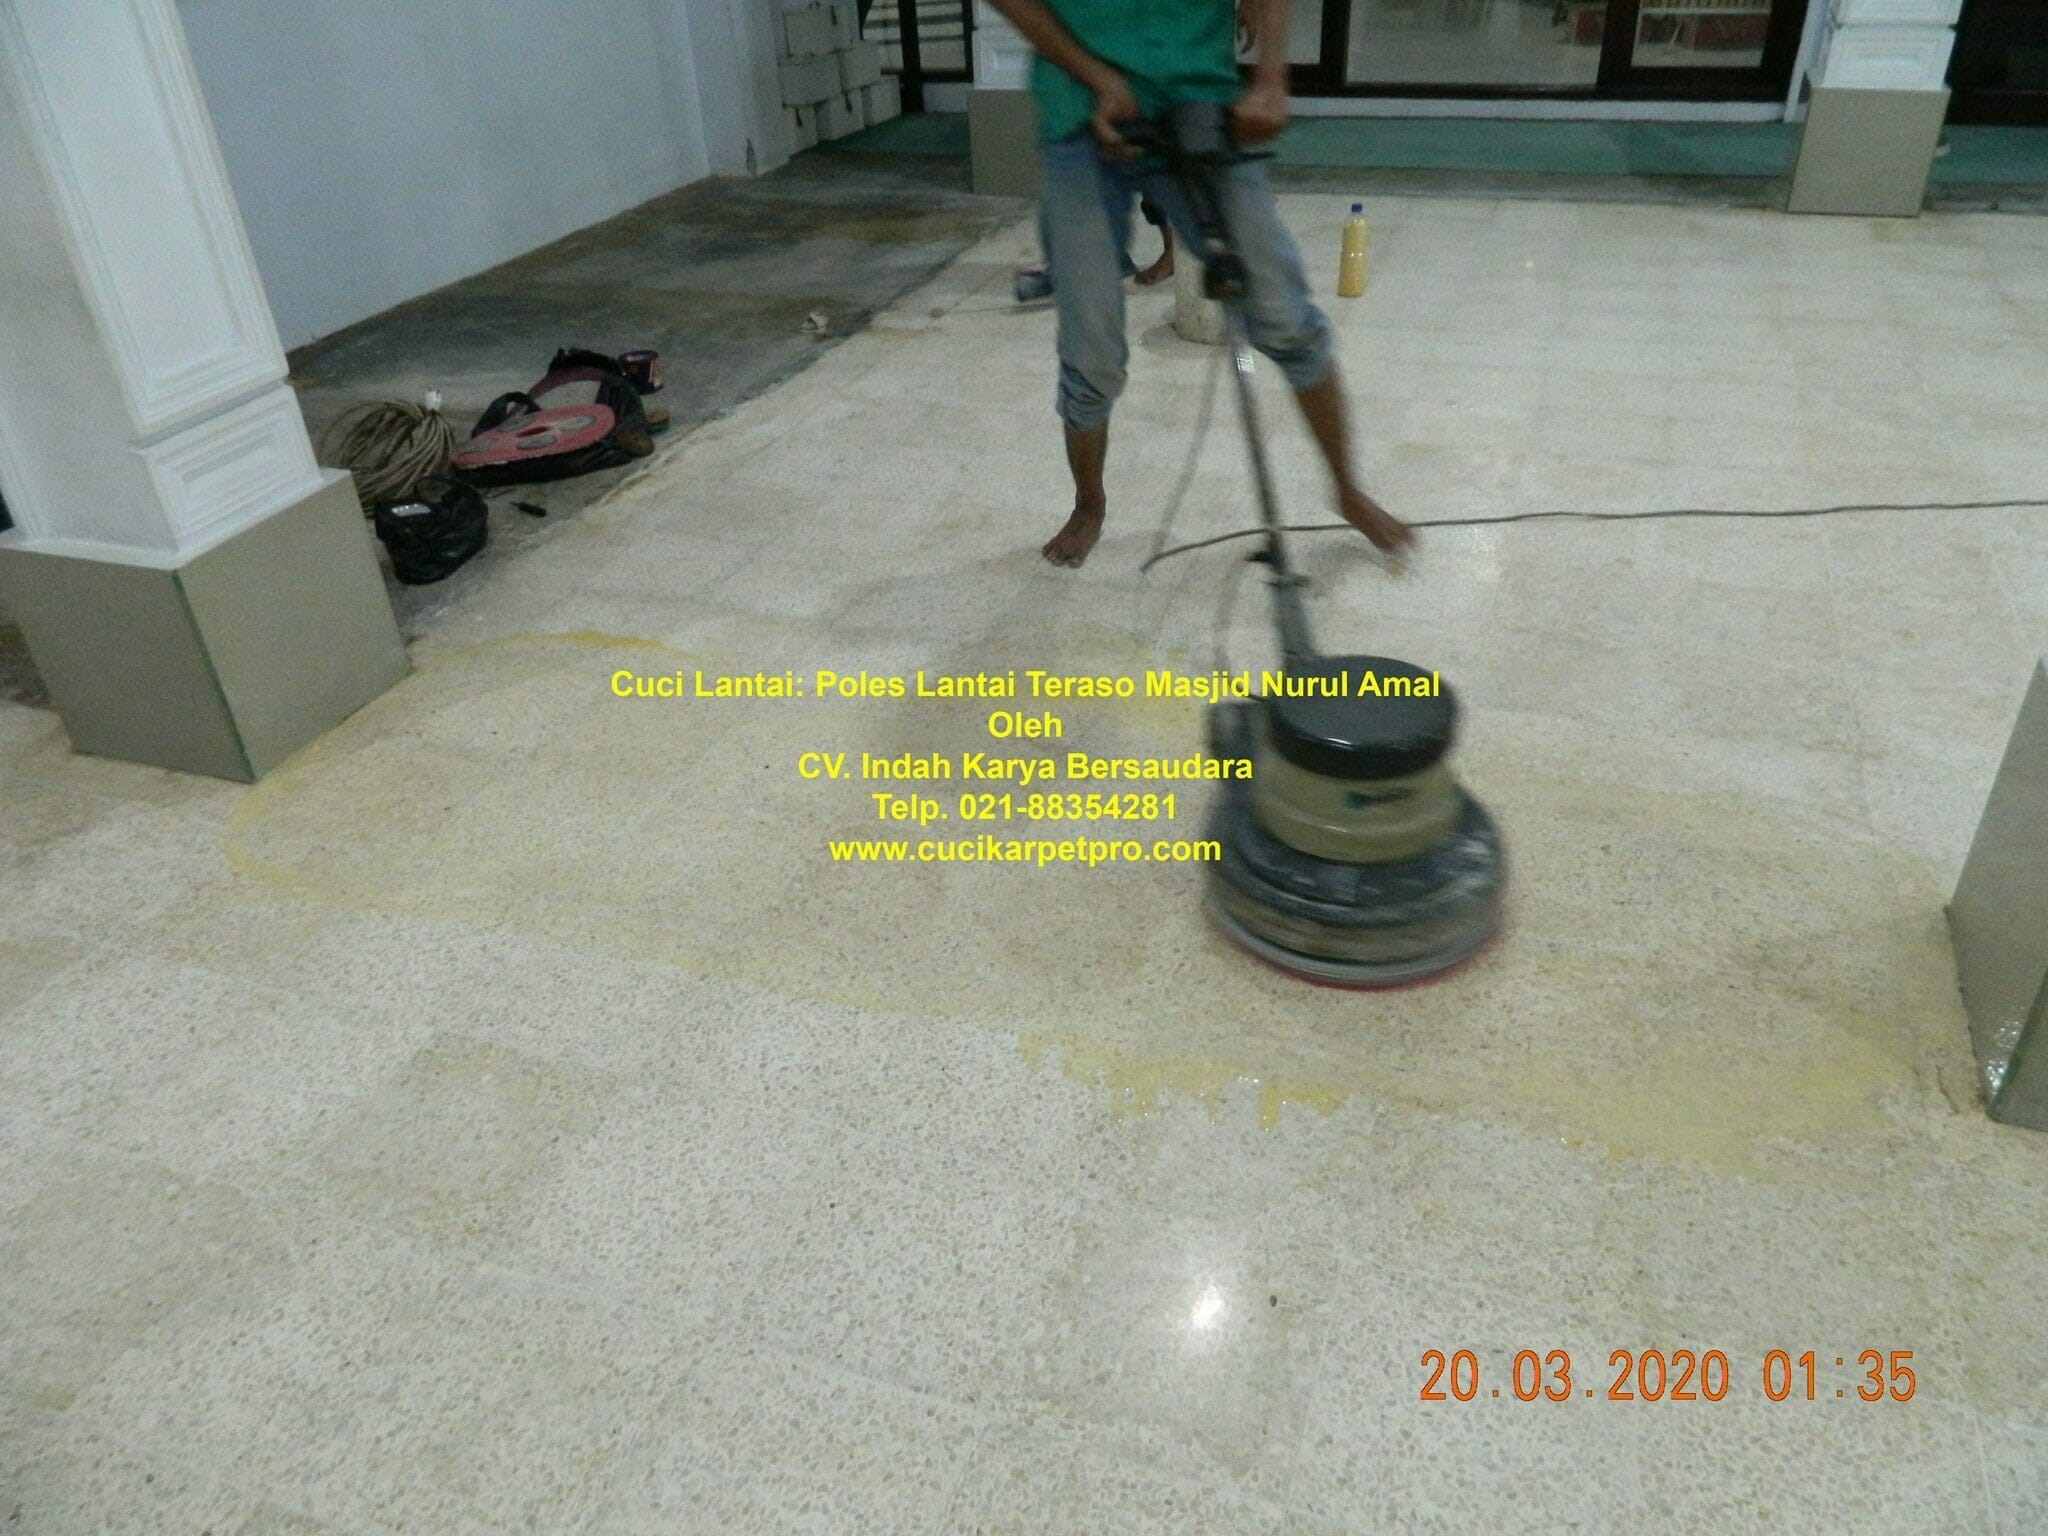 cuci lantai: poles lantai teraso masjid nurul amal 74